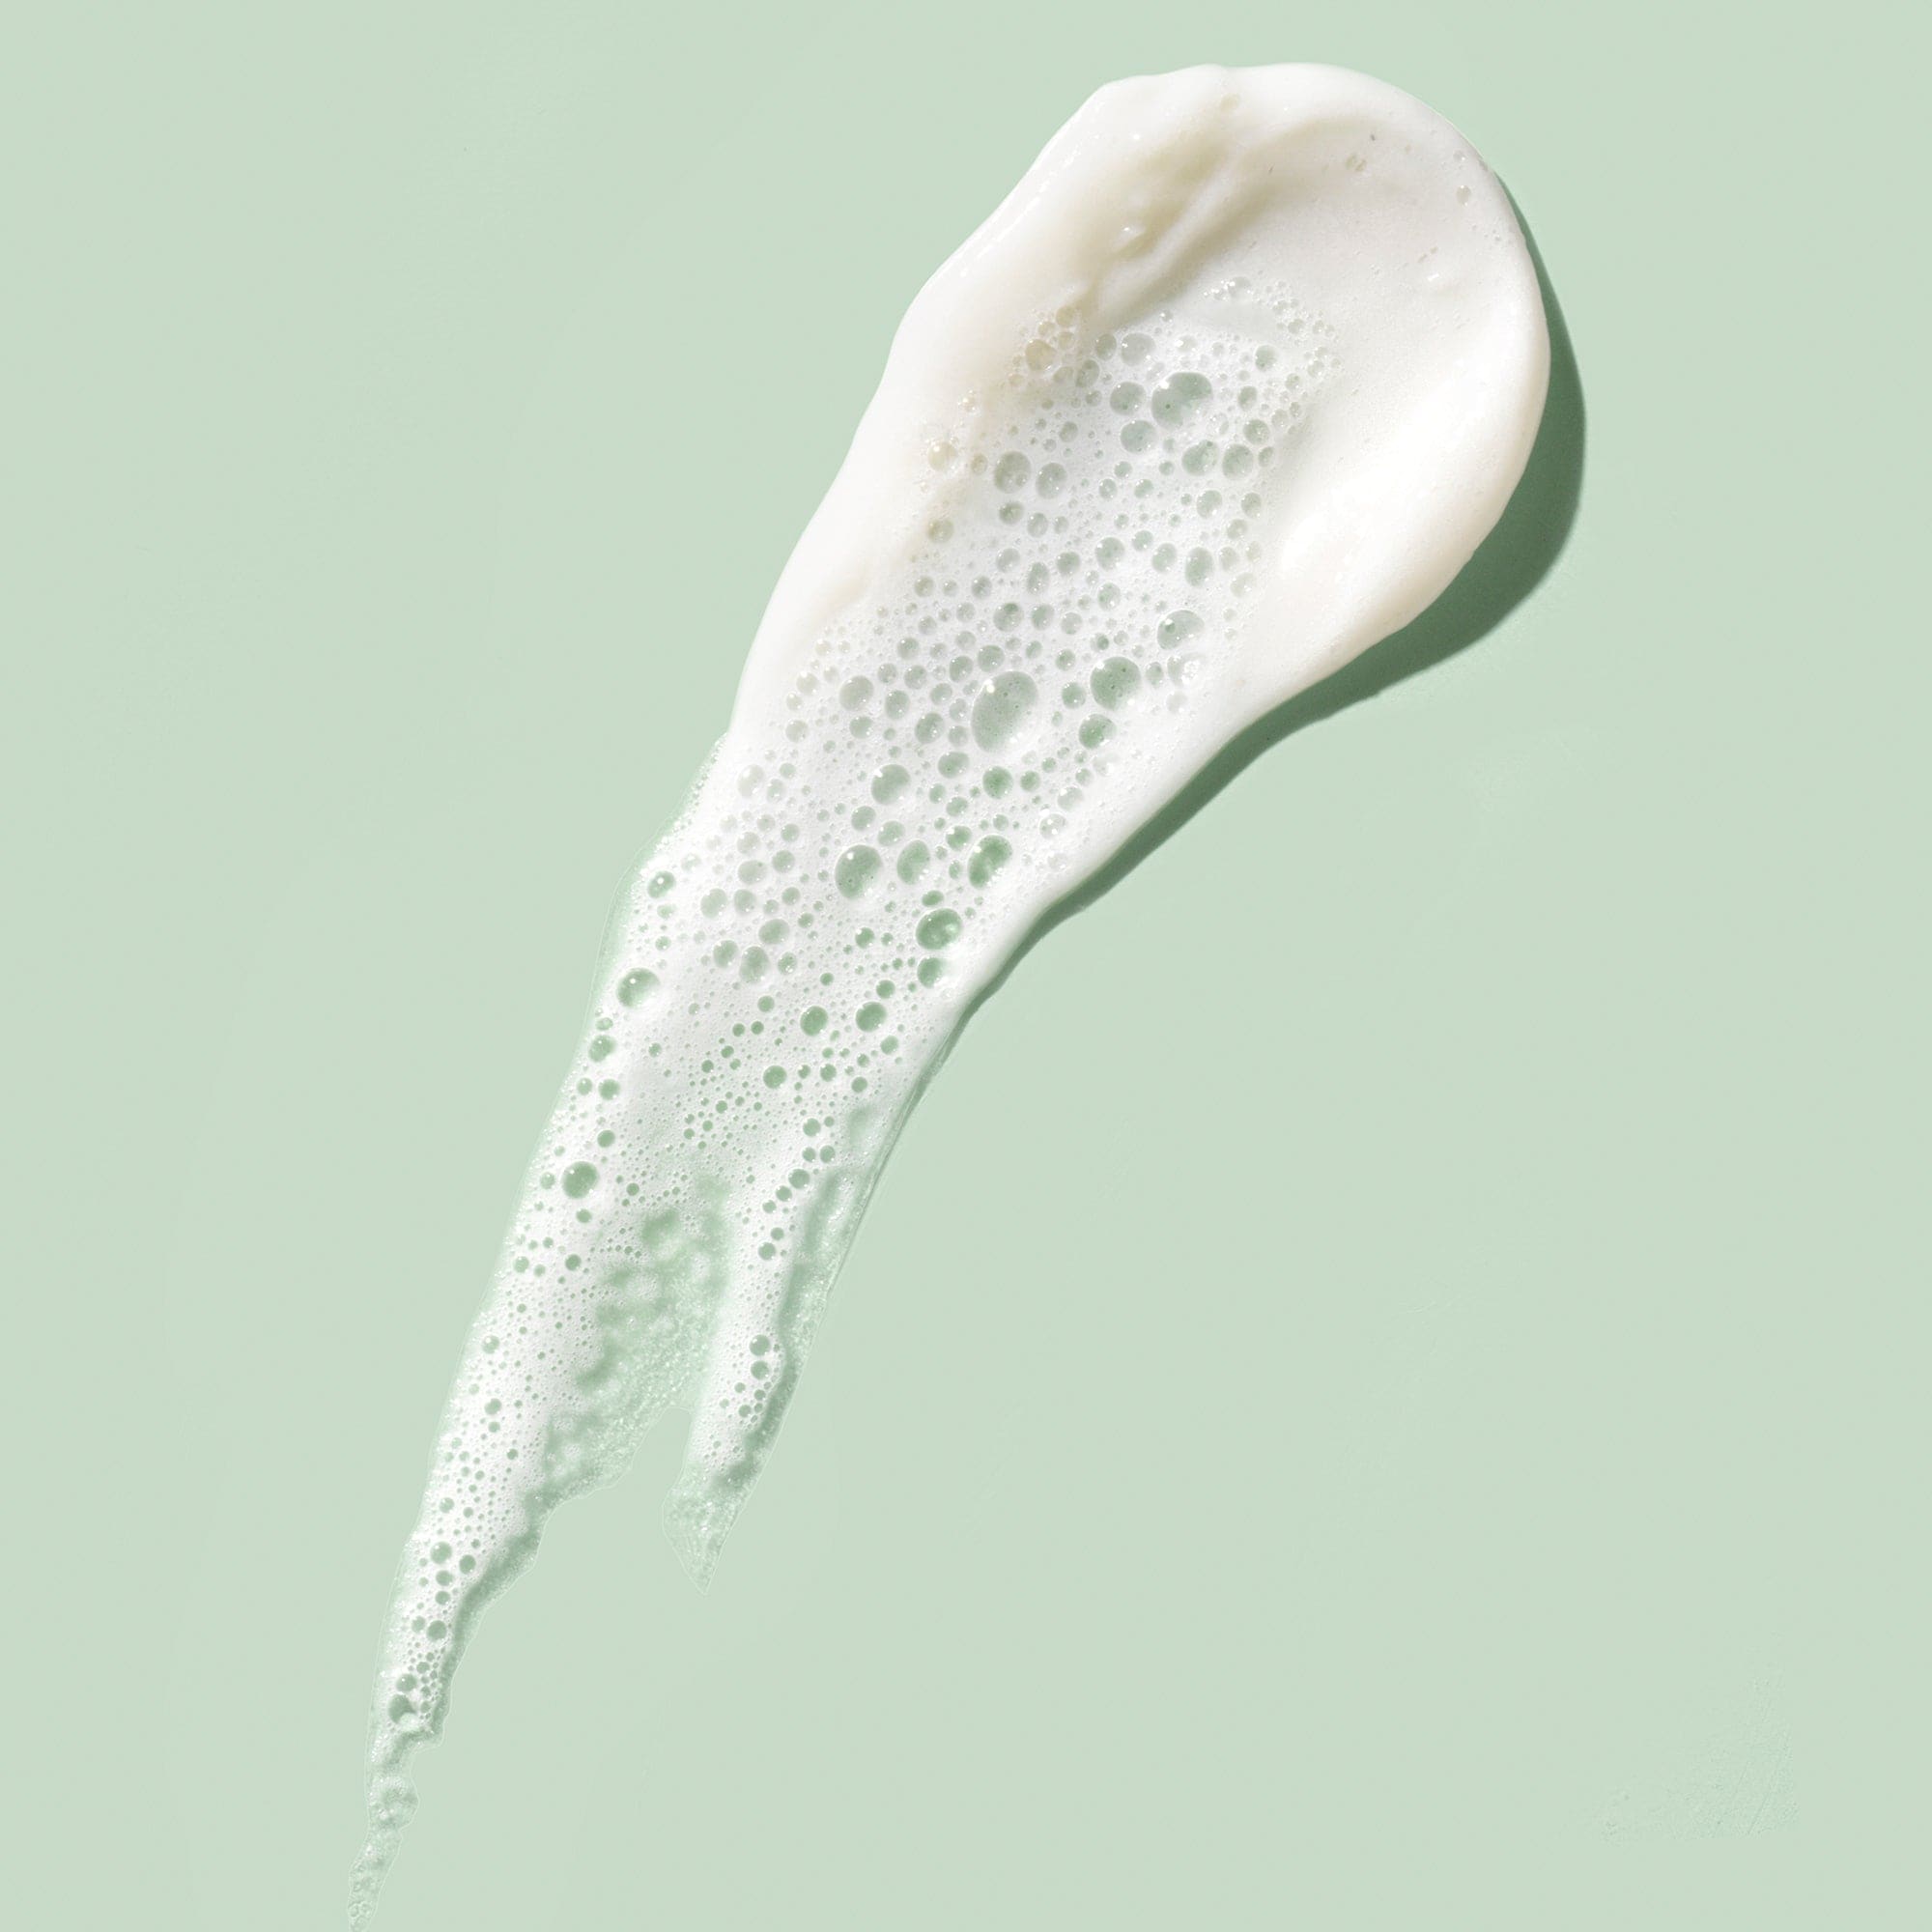 Foaming Cream Cleanser de EVE LOM Espuma limpiadora cremosa